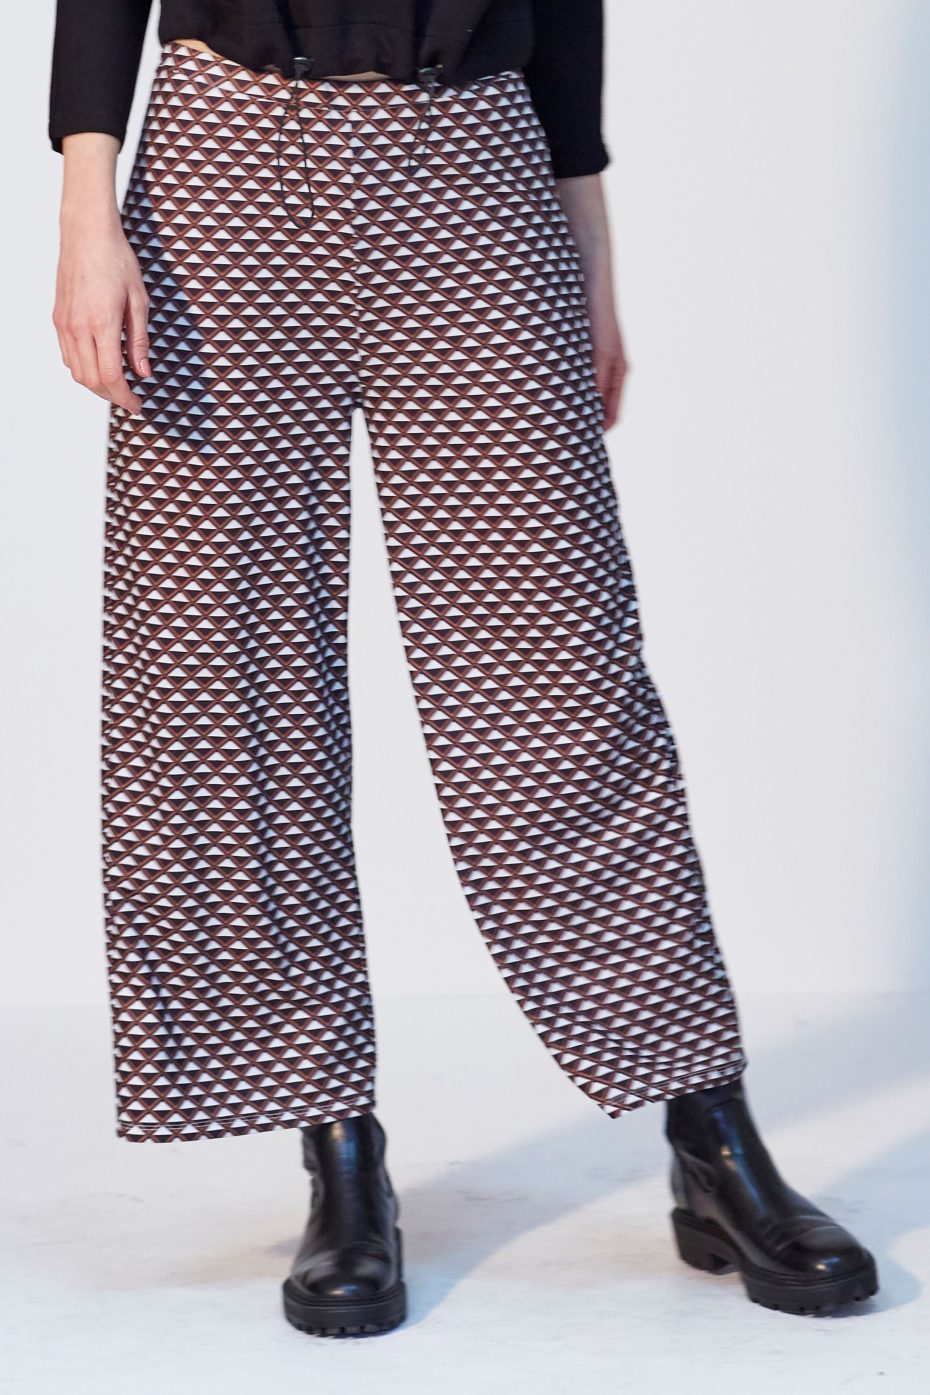 Pantalon Punto Cropped Geometrico de Vandos